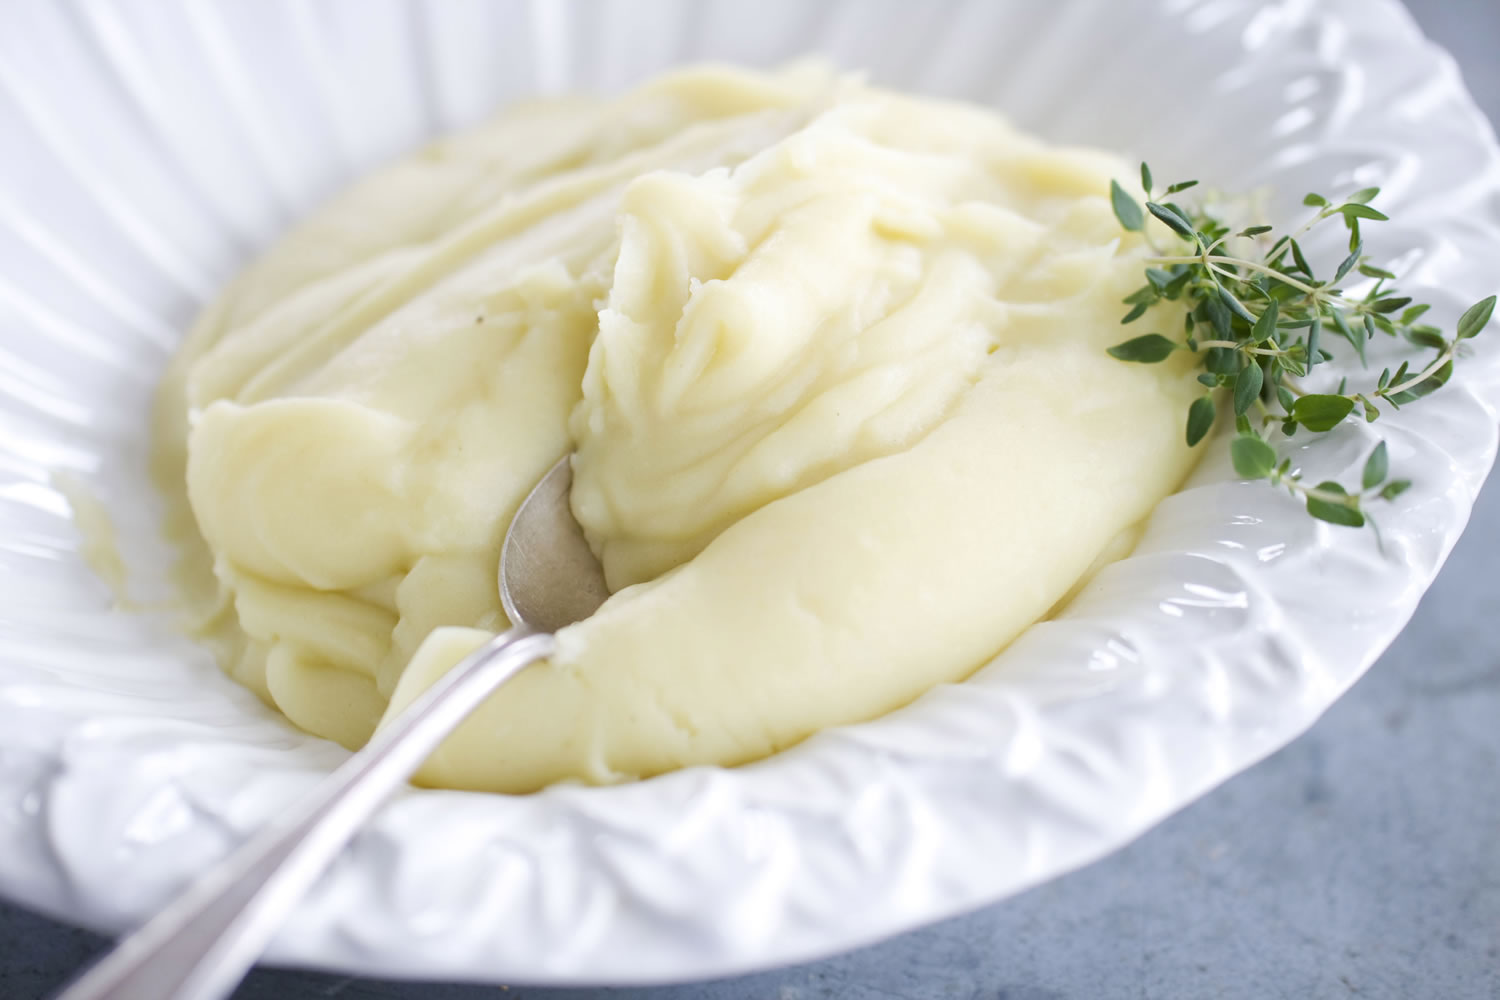 Dairy-free modernist mashed potatoes